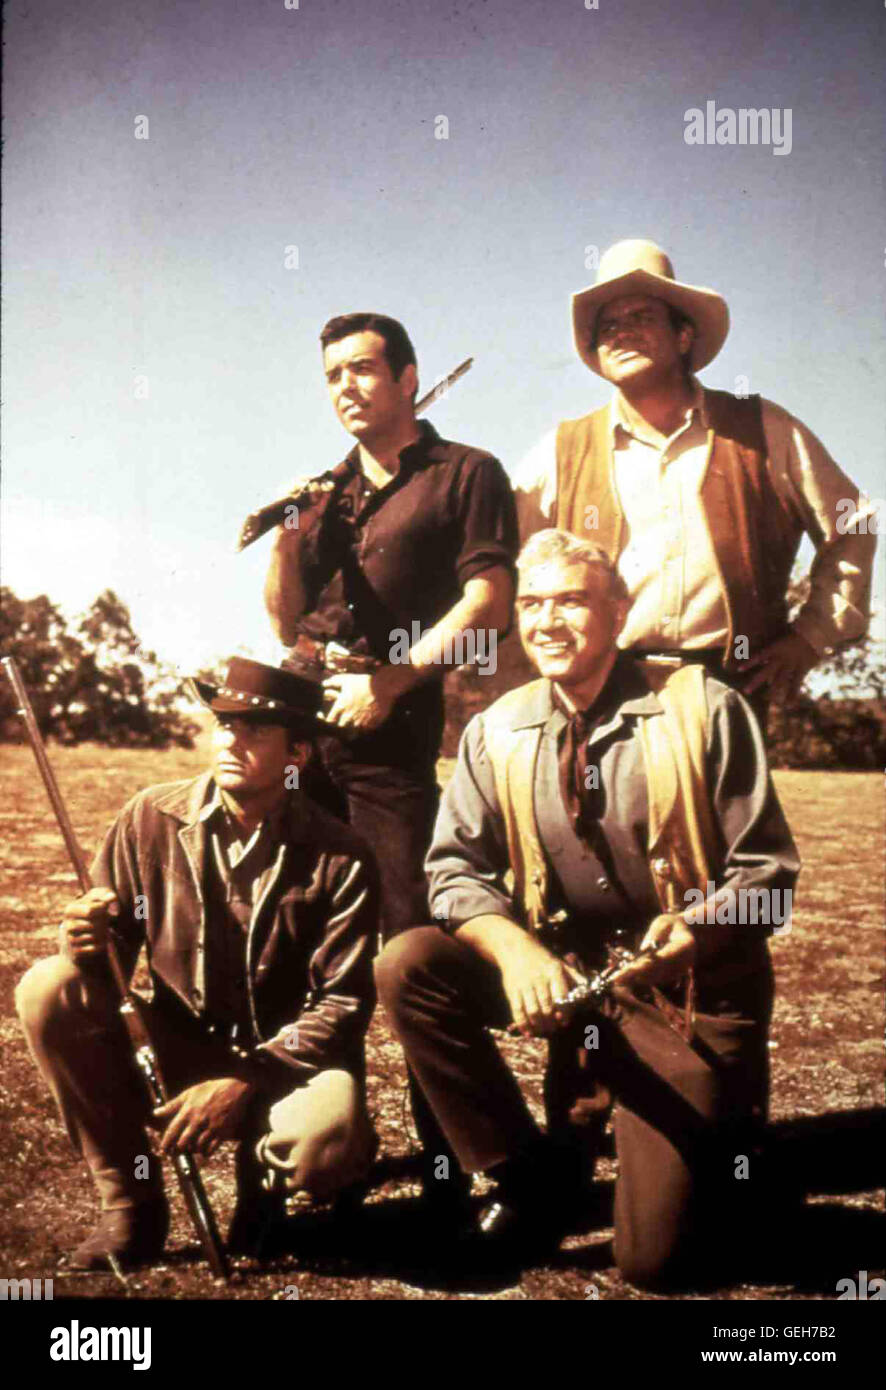 Bonanza - Western-Serie 1959-1973  The Cartwright Family  Adam (PERNELL ROBERTS), Joseph -LIttle Joe- (MICHAEL LANDON), father Ben (LORNE GREENE), Eric -Hoss- (DAN BLOCKER)., 1950er, 1950s, 1960er, 1960s, 1970er, 1970s, Bonanza, Cartwright family, Cowboyhut, Cowboys, Fernsehen, Gewehr, Serie, Television, US Series, Vater und Soehne, Vater und Söhne, Western, cowboy, father and sons, gun, guns, wearing a stetson, Bonanza Stock Photo